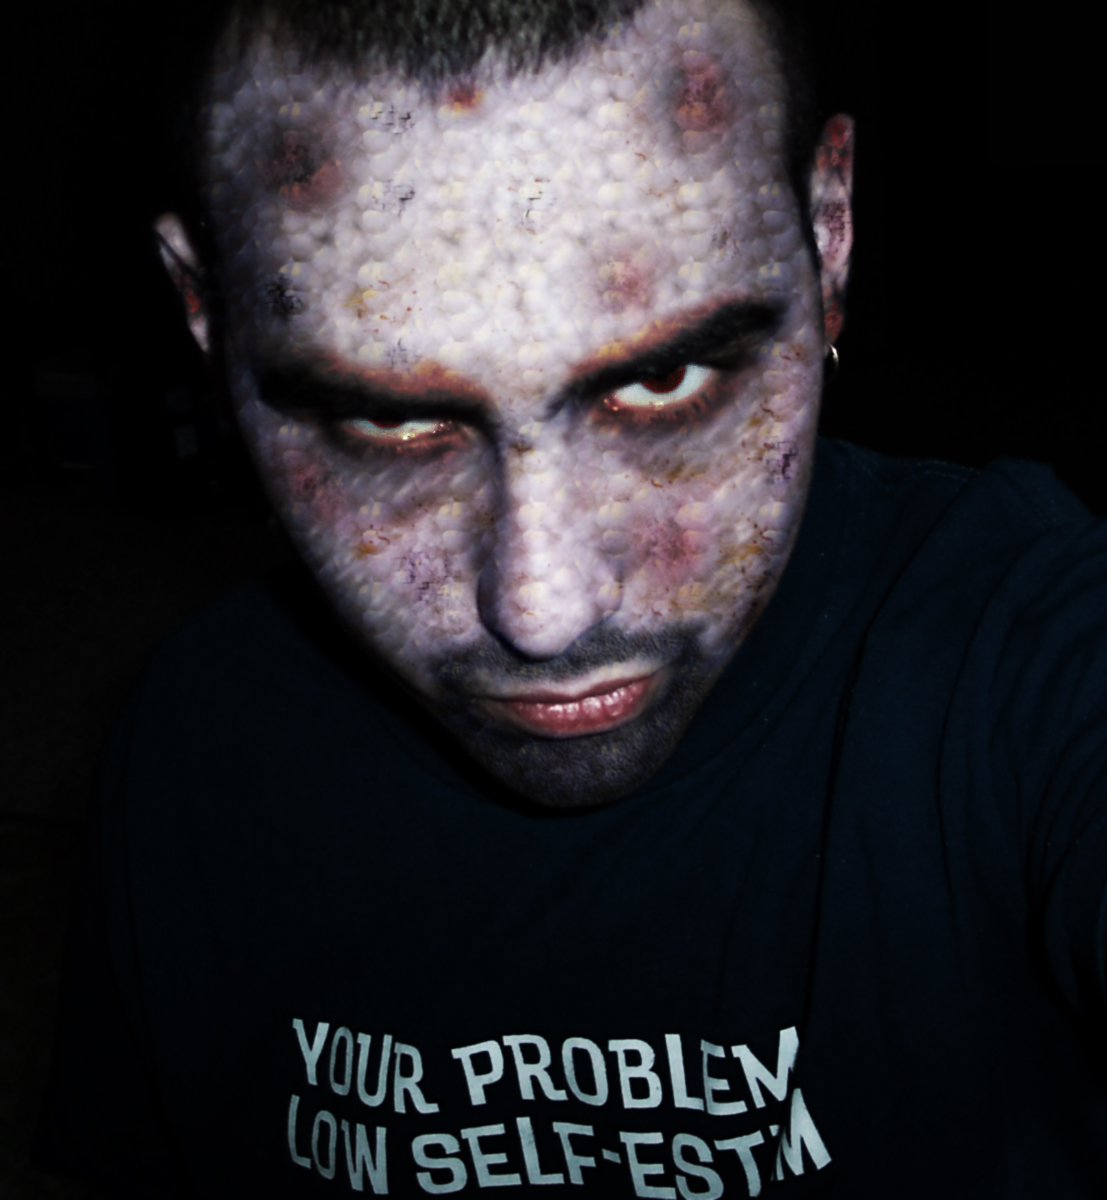 Self descriptive... zombie